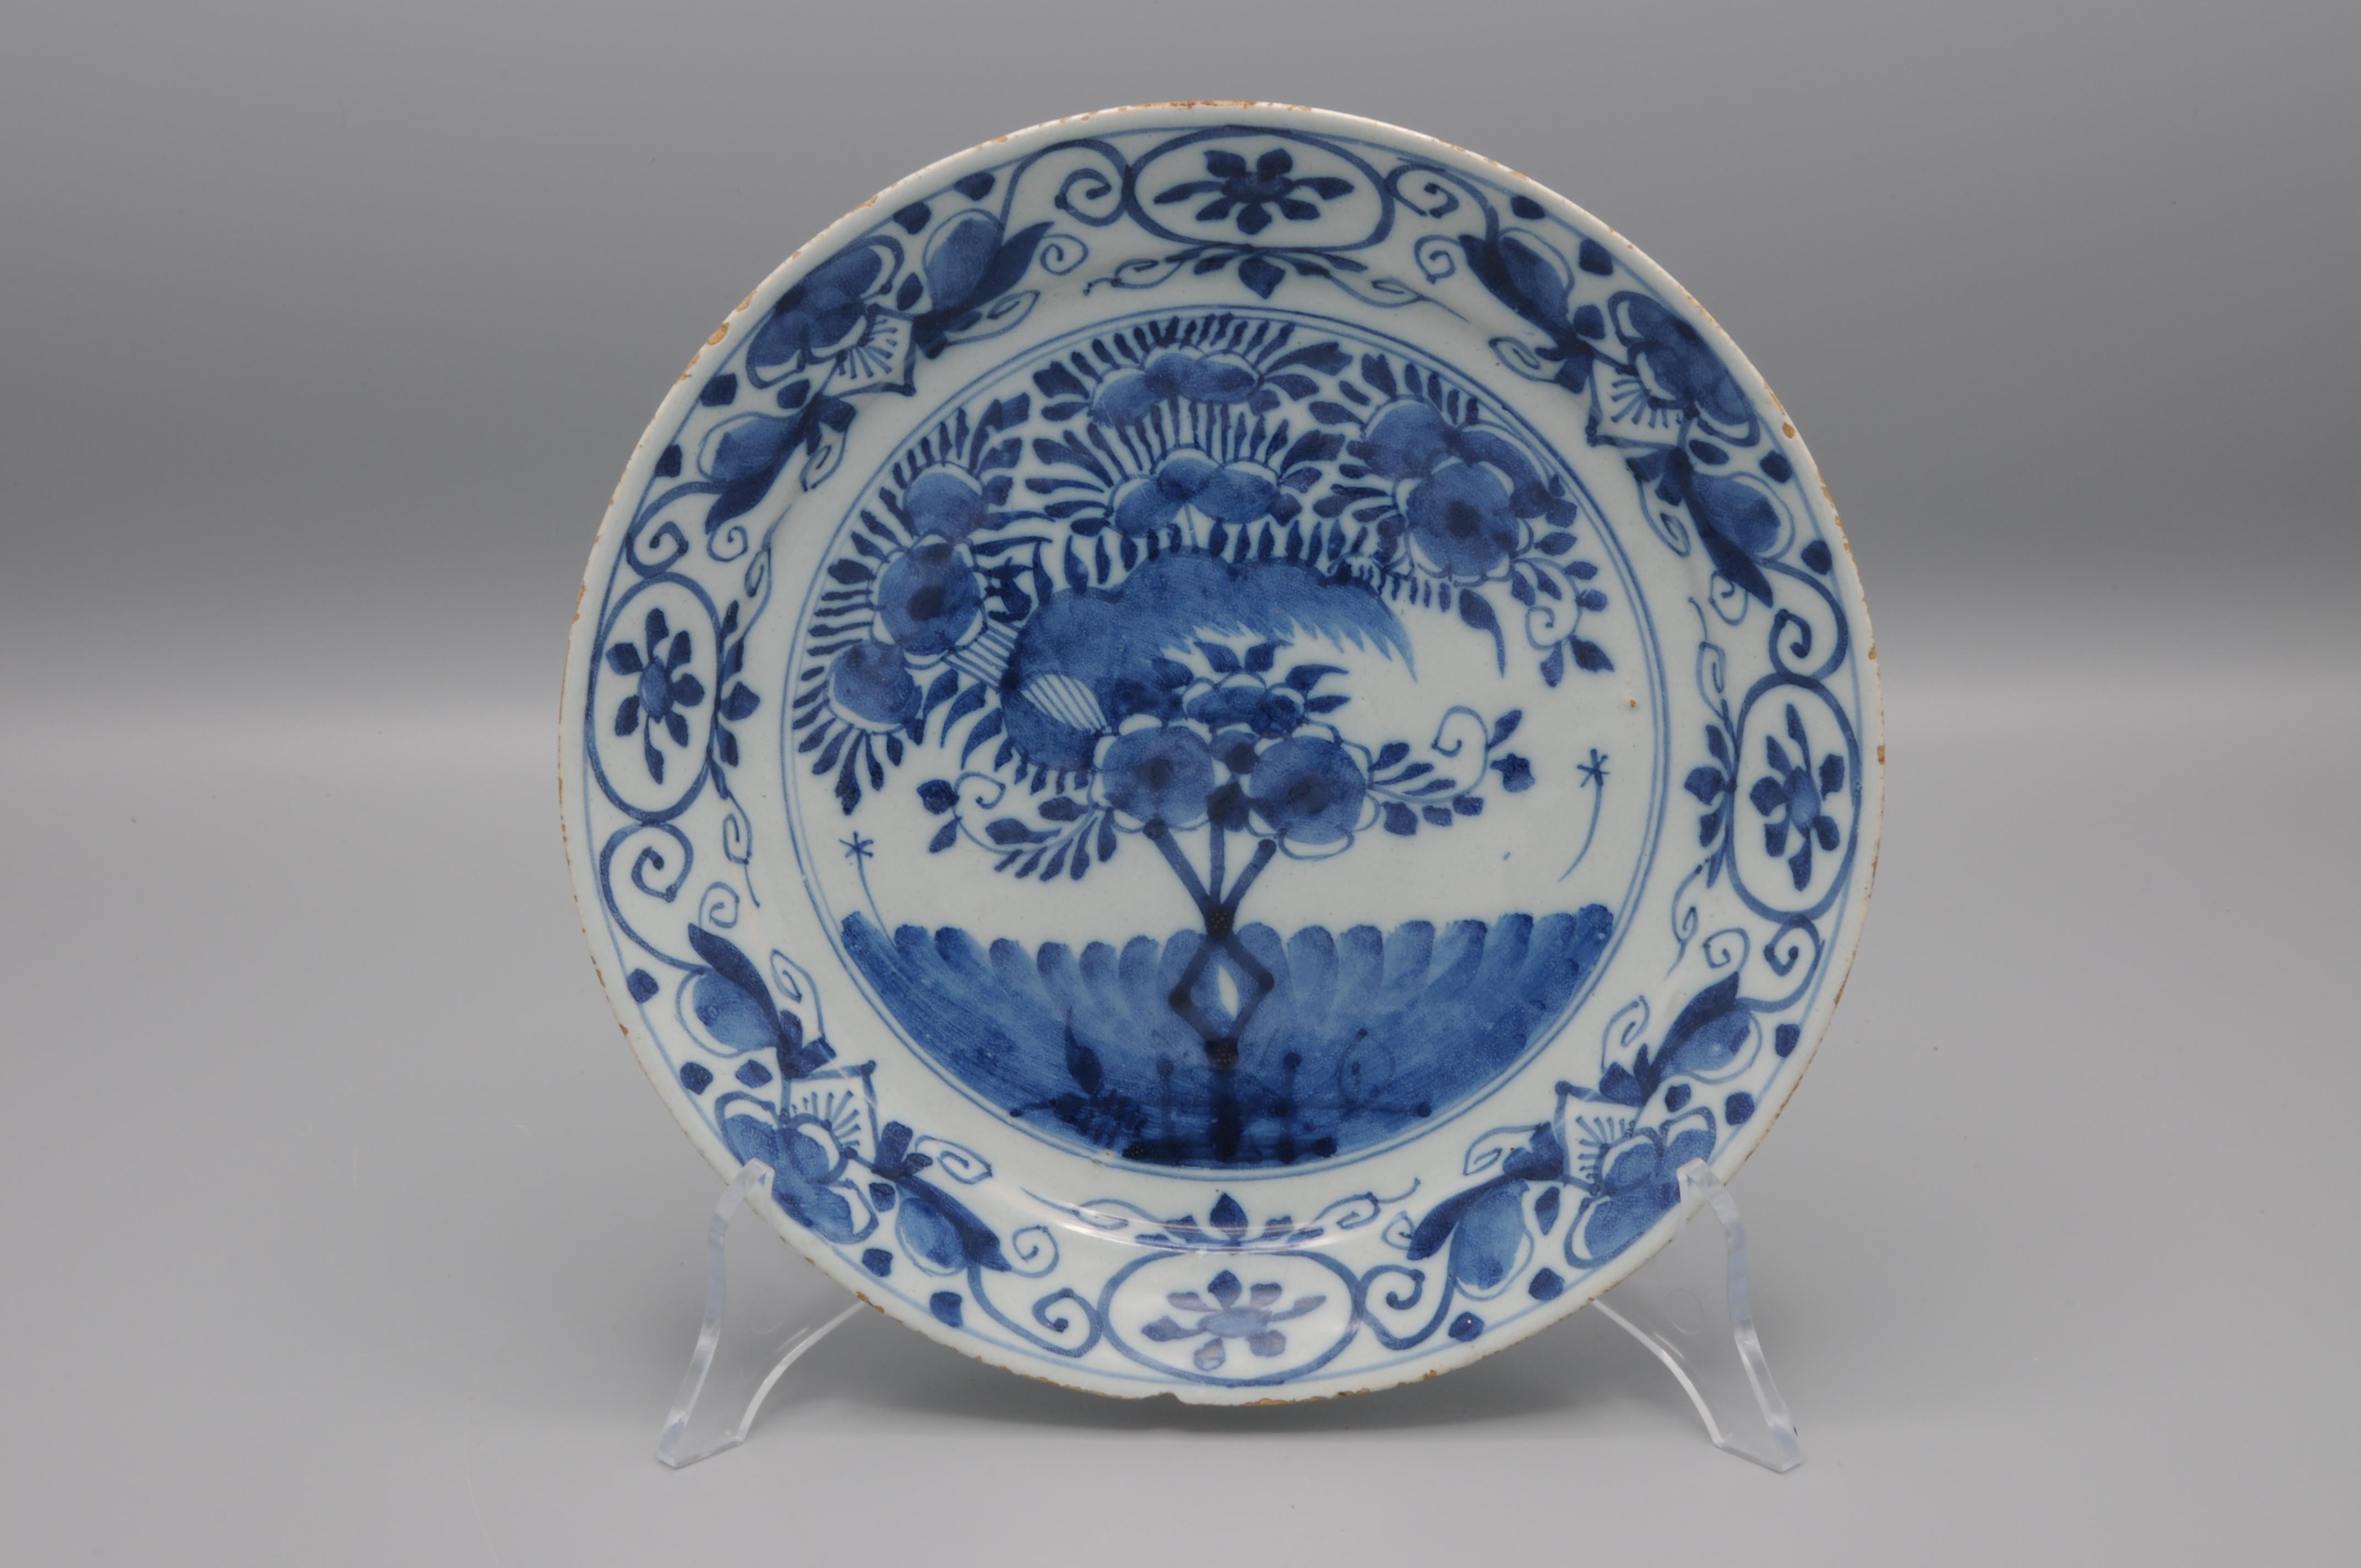 Delft Blue set of 'Tea Tree' plates - mid 18th century For Sale 6